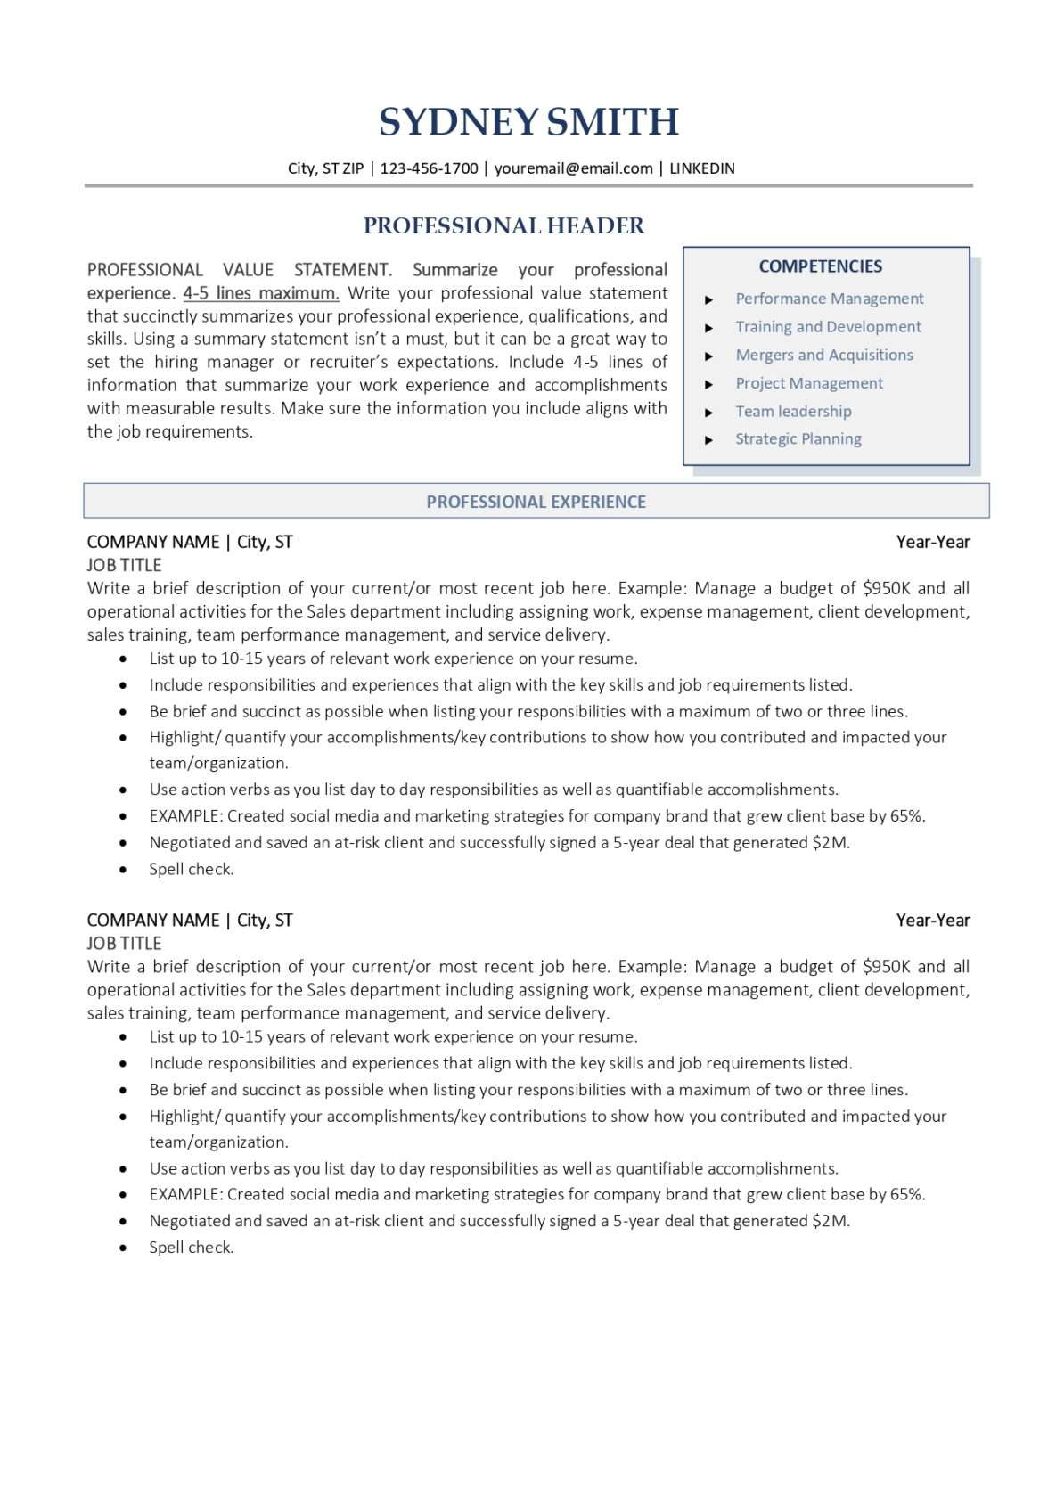 Wyndham-Resume-Template-1187x1536